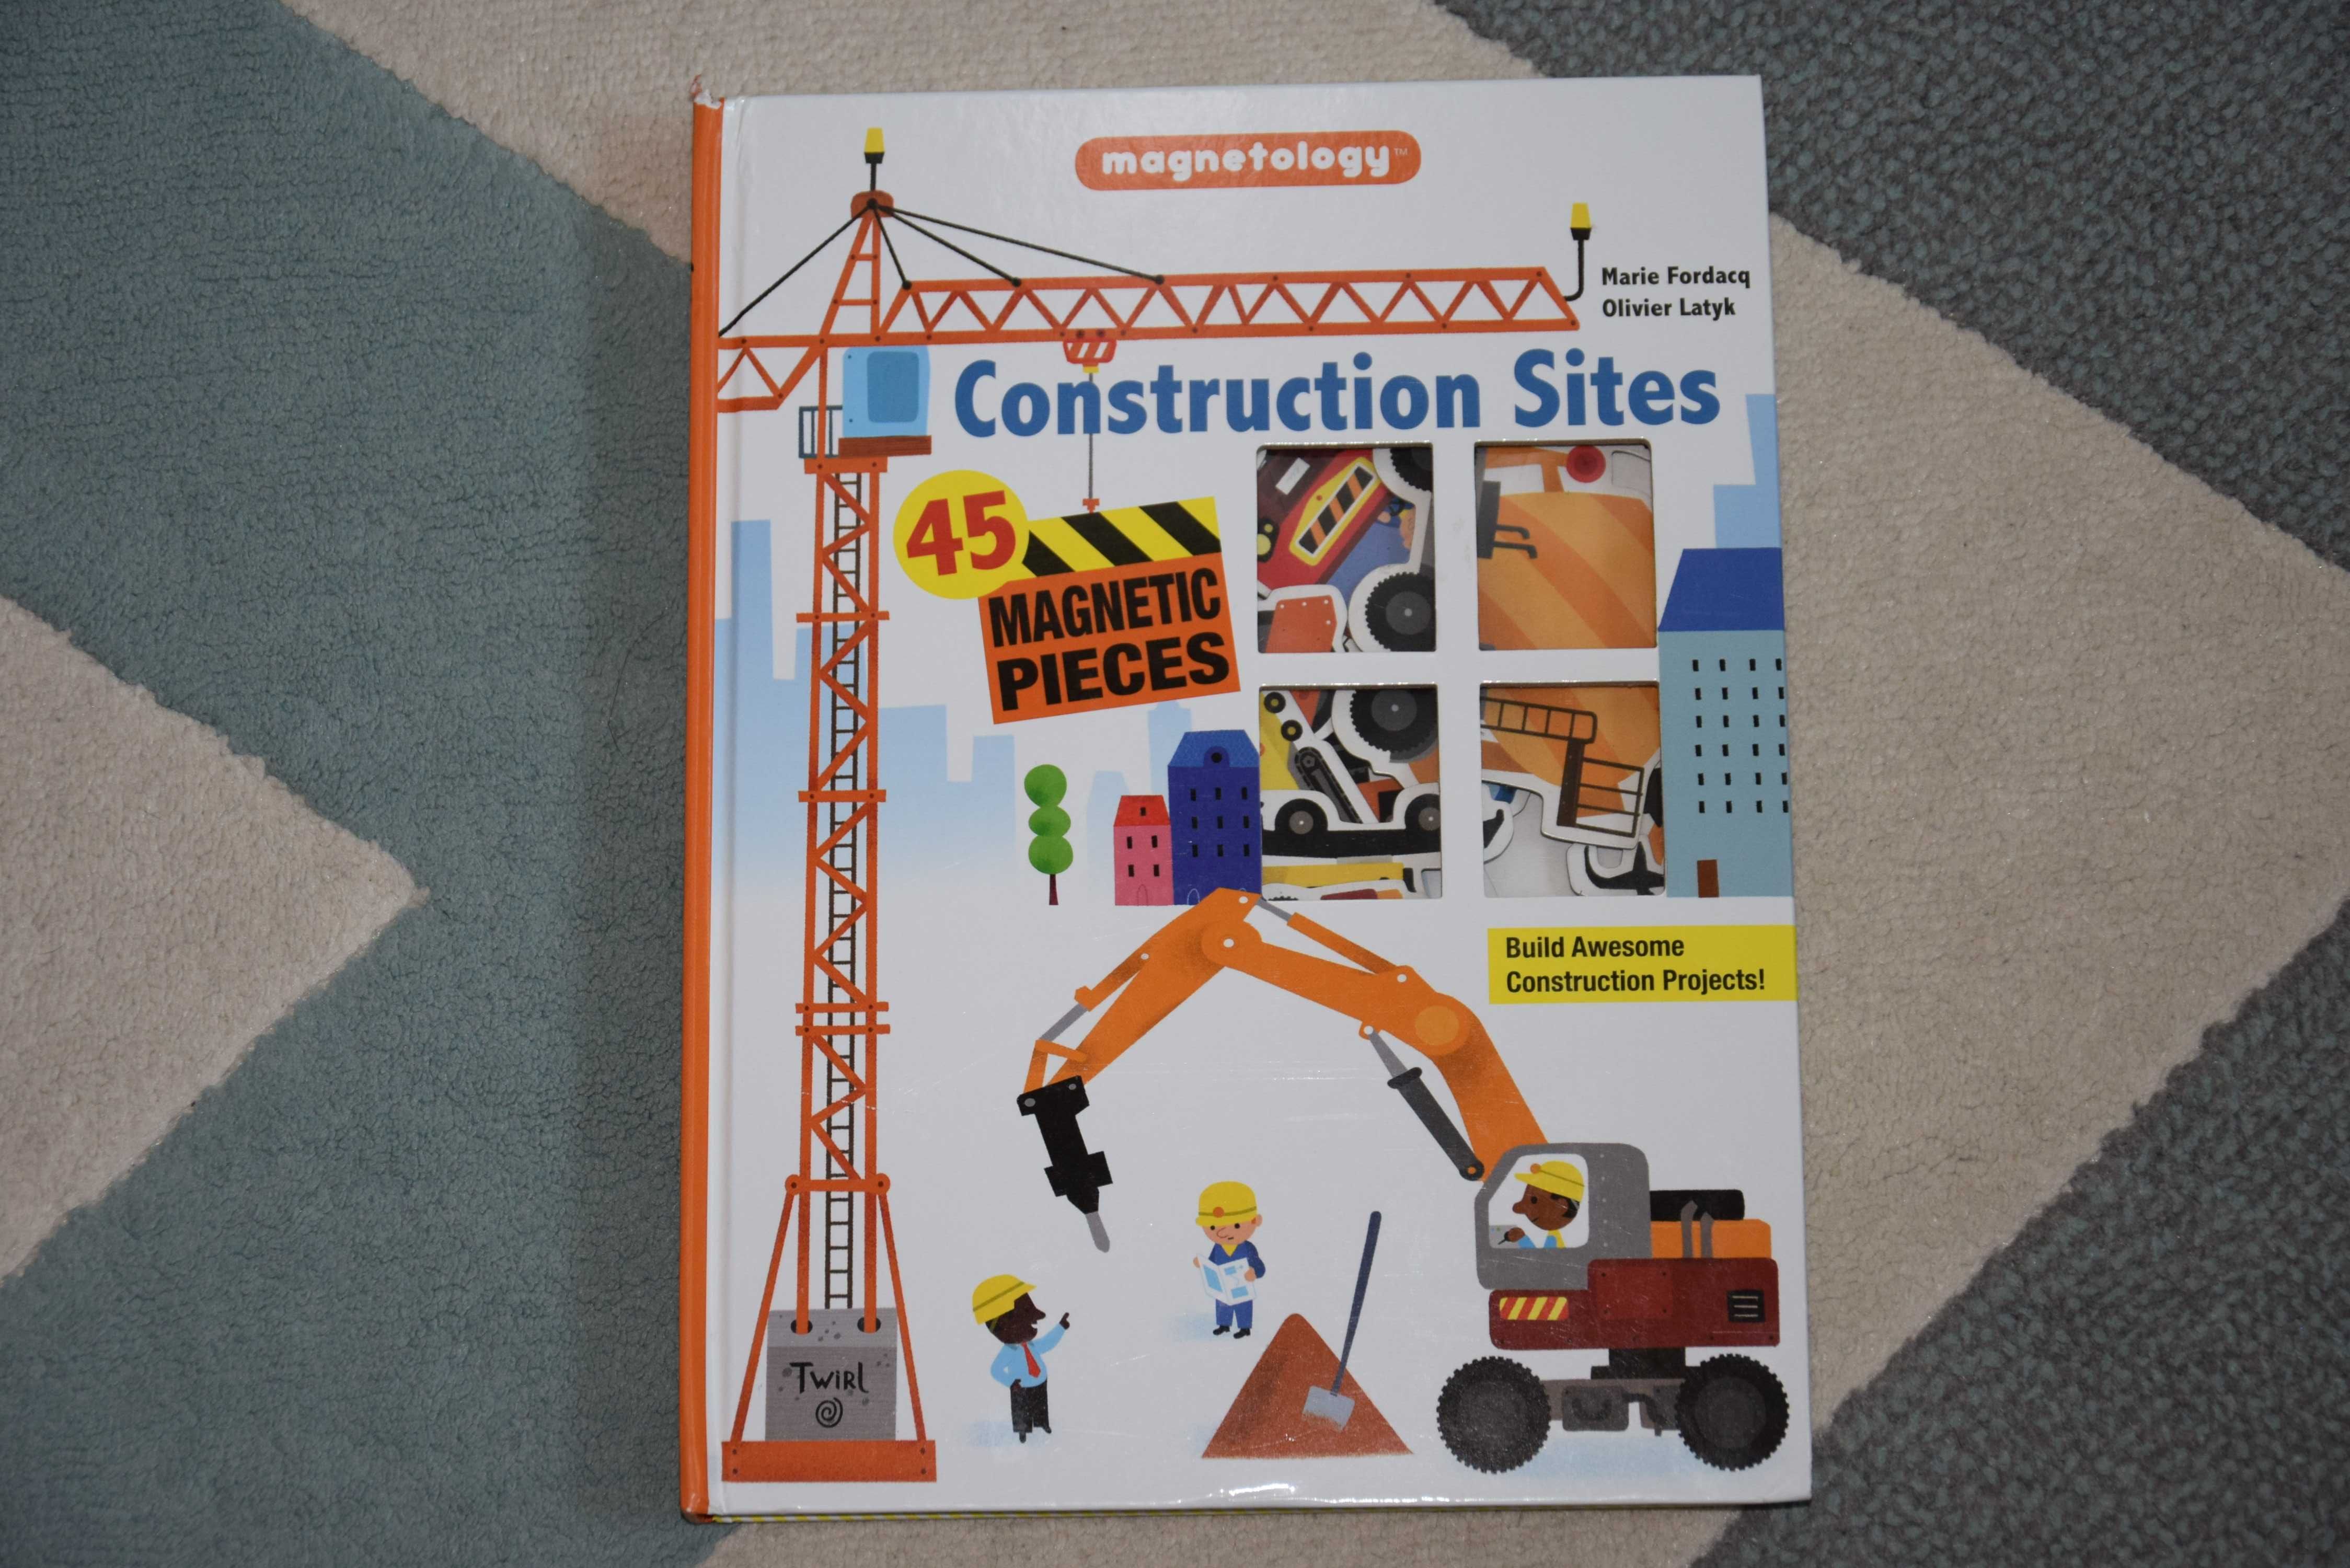 Magnetology Construction Sites Fordacq książka z magnesami budowa